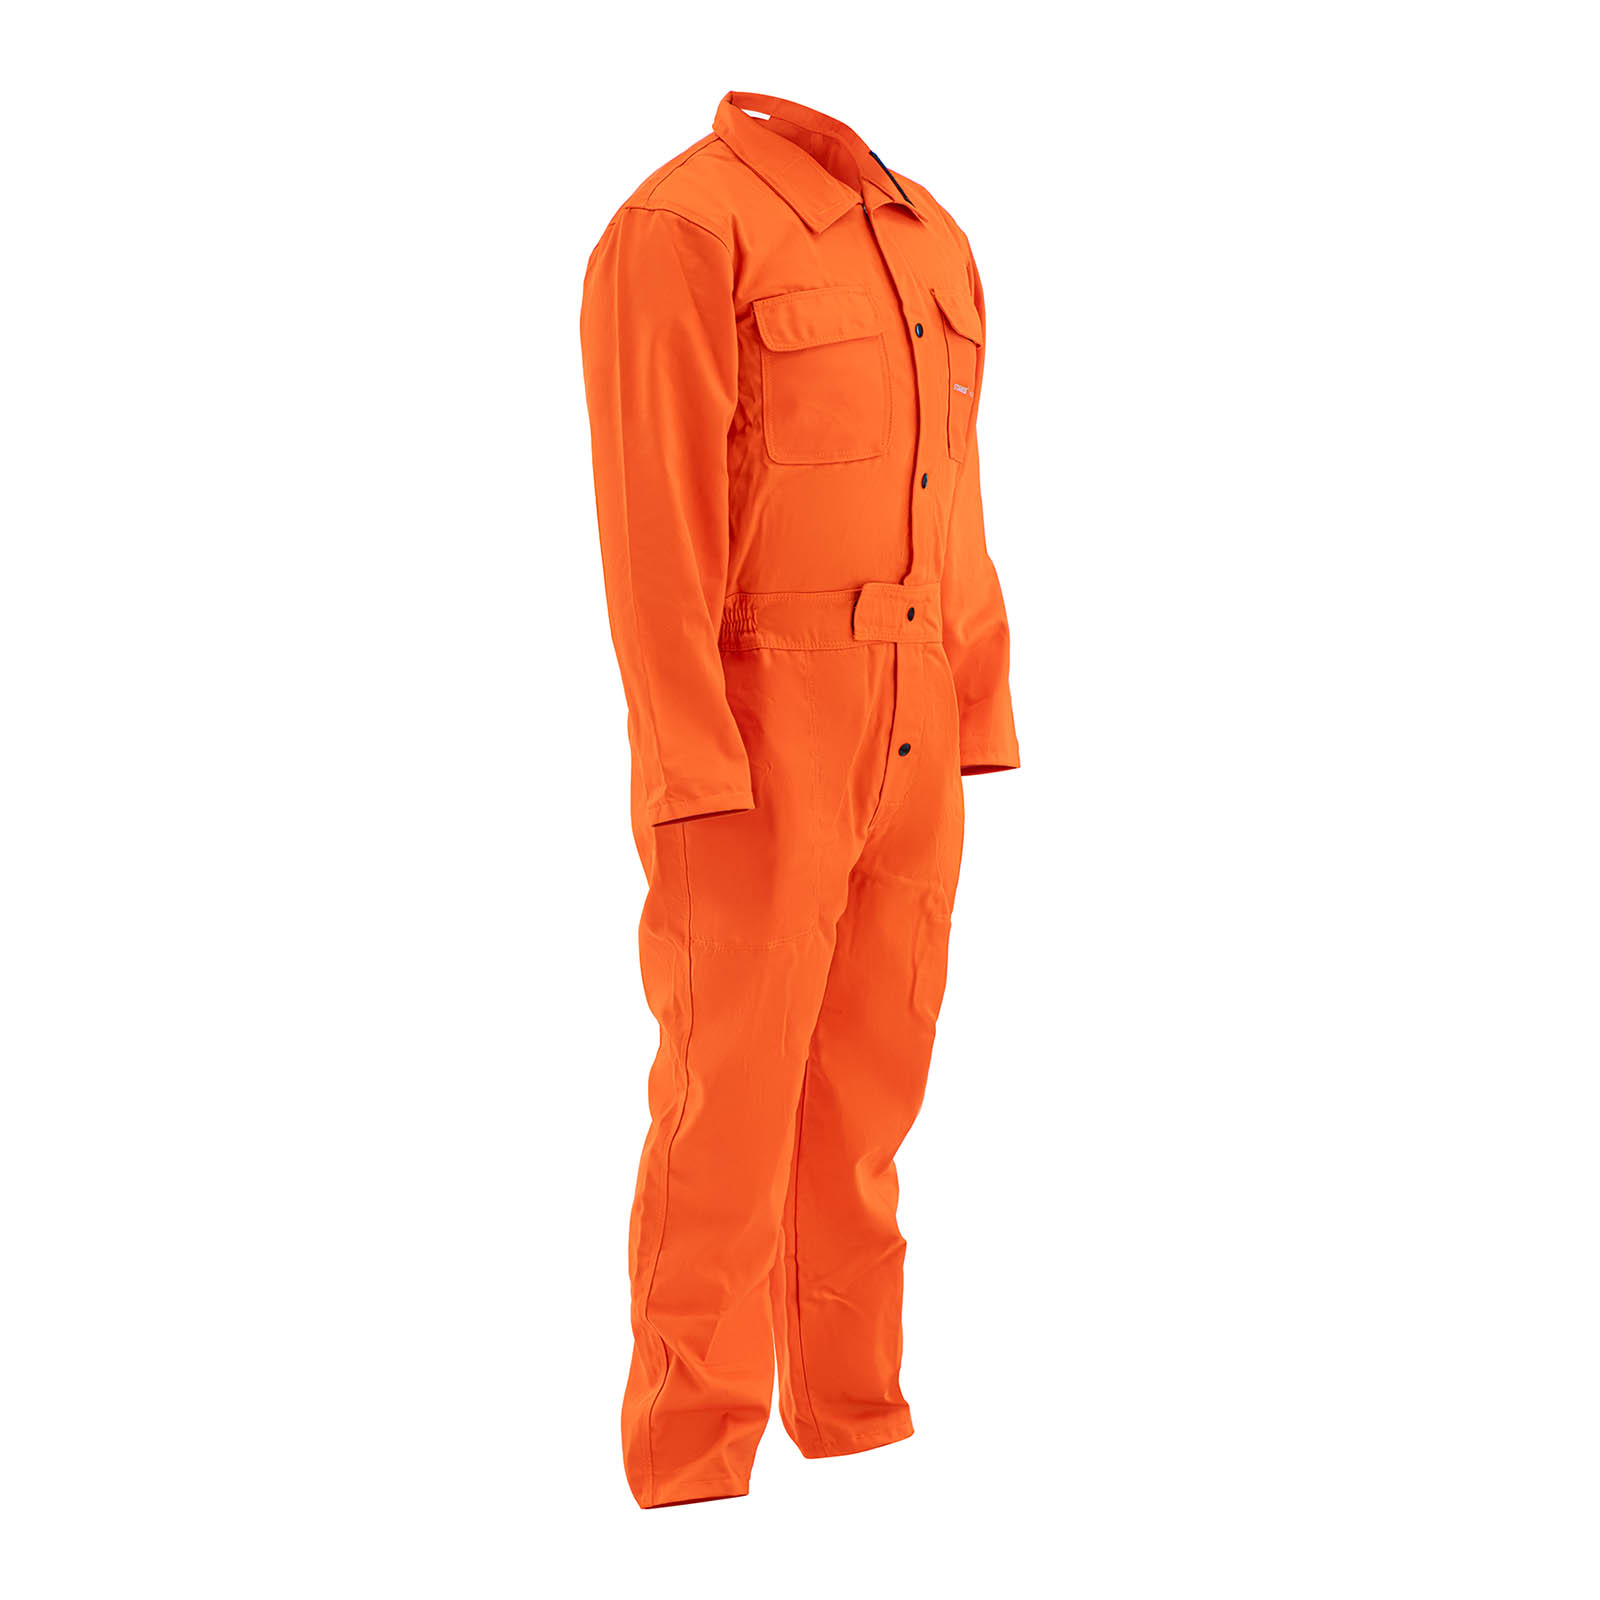 Welding Overalls - size XXL - orange